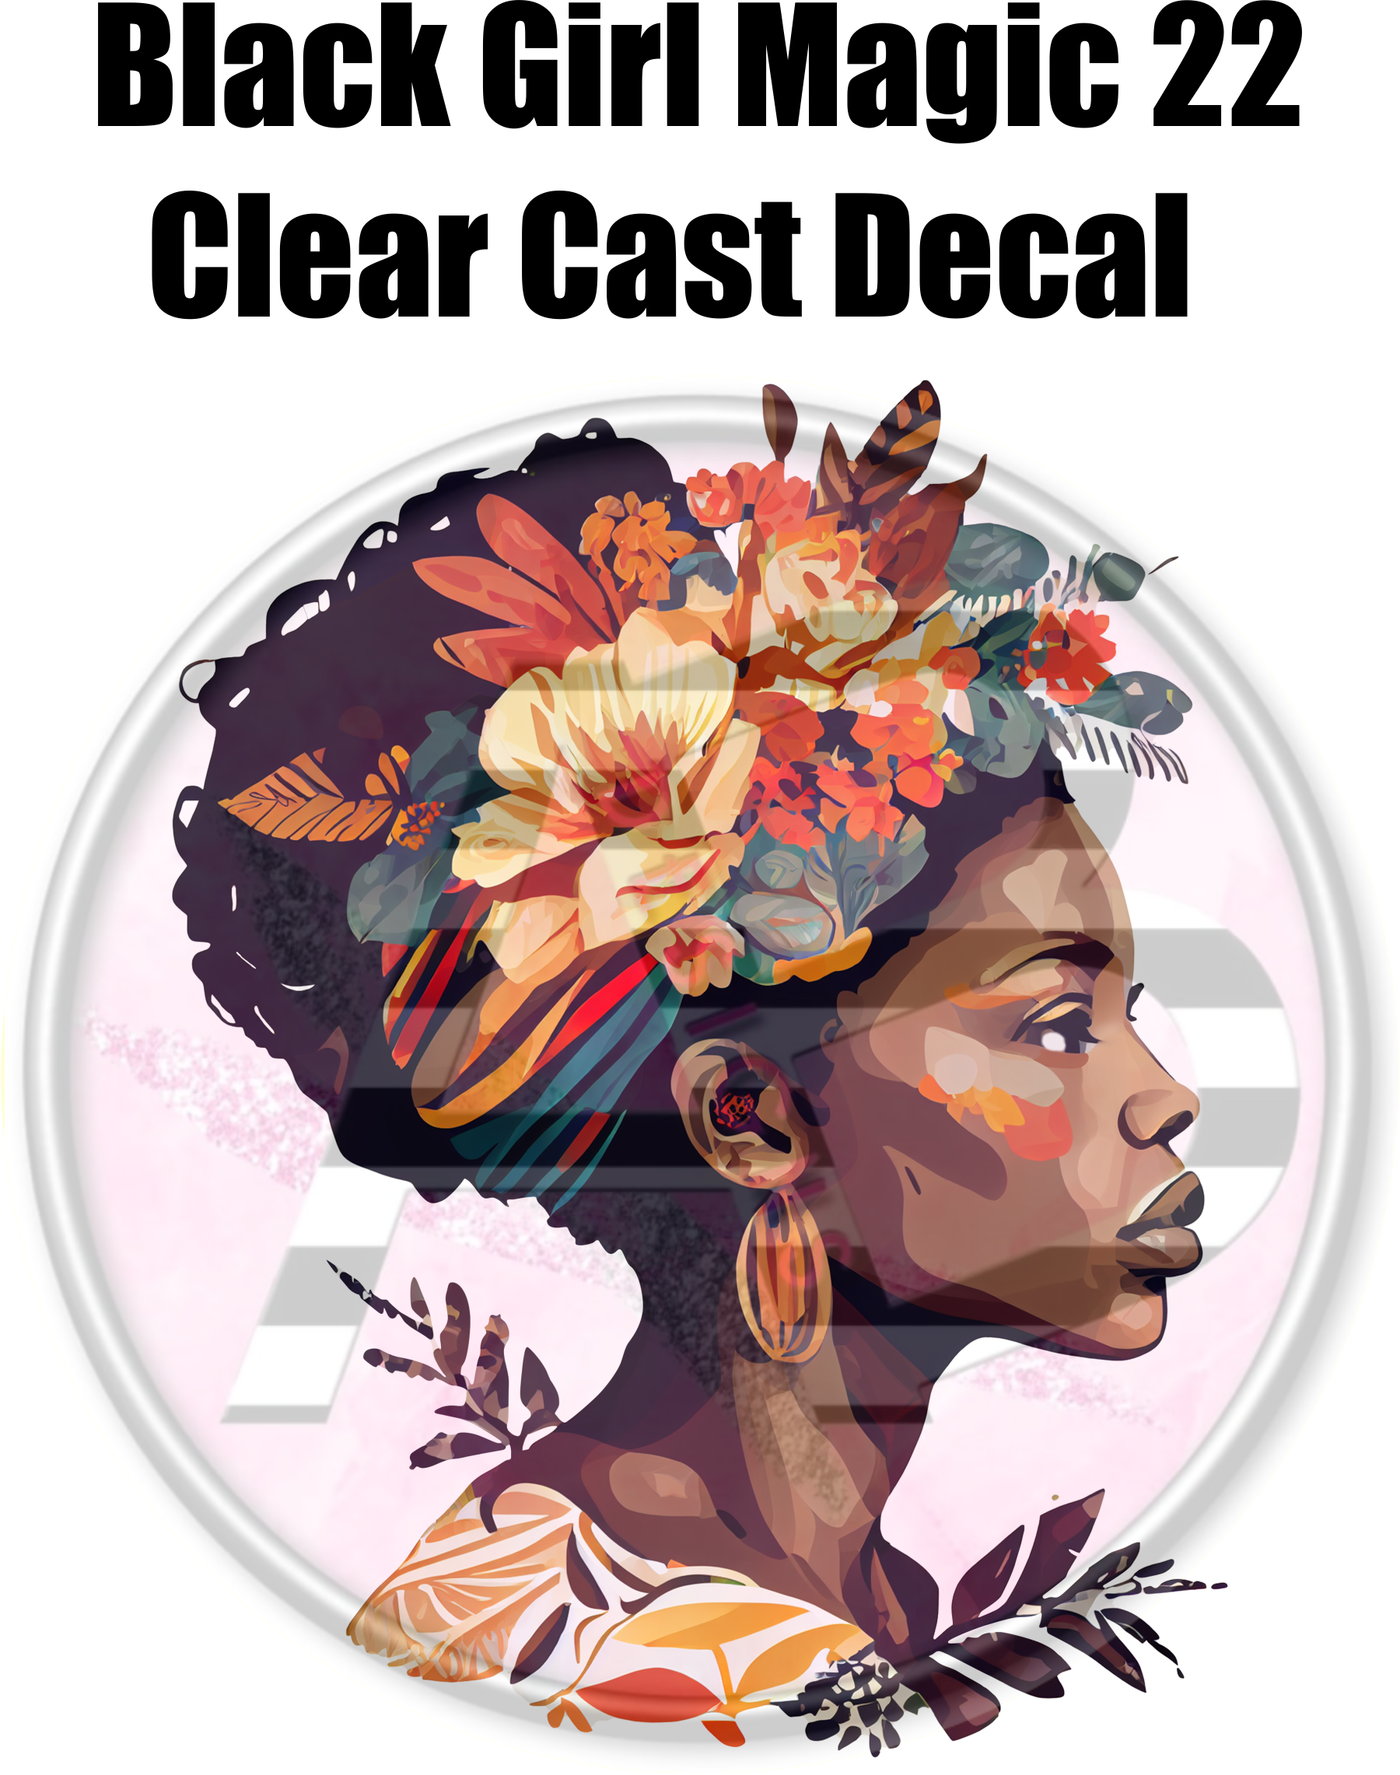 Black Girl Magic 22 - Clear Cast Decal